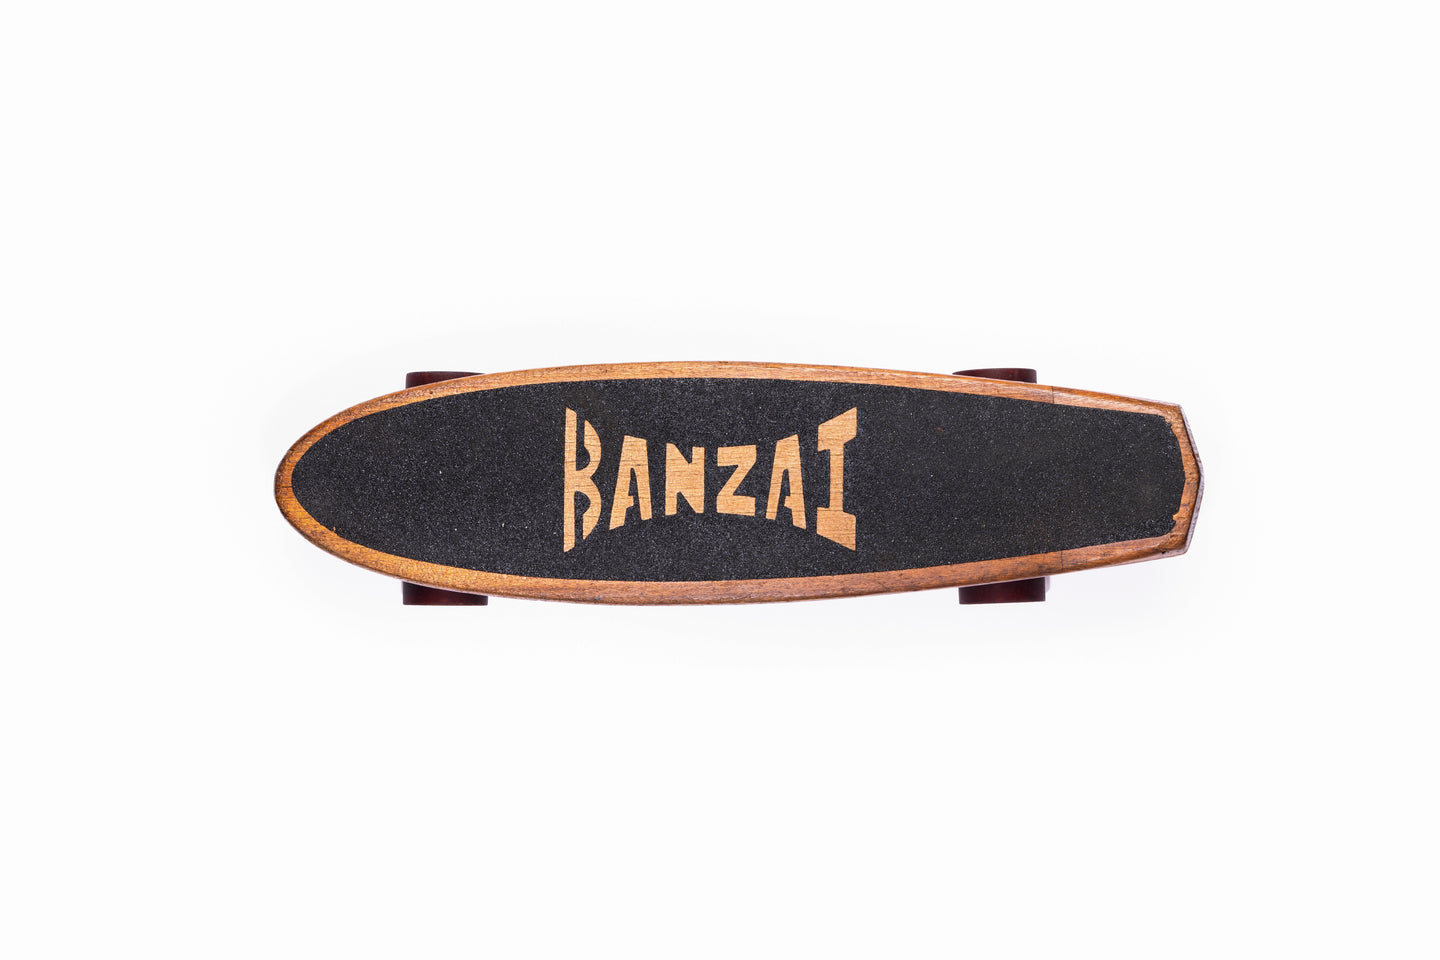 Original Banzai Skateboard from 1976